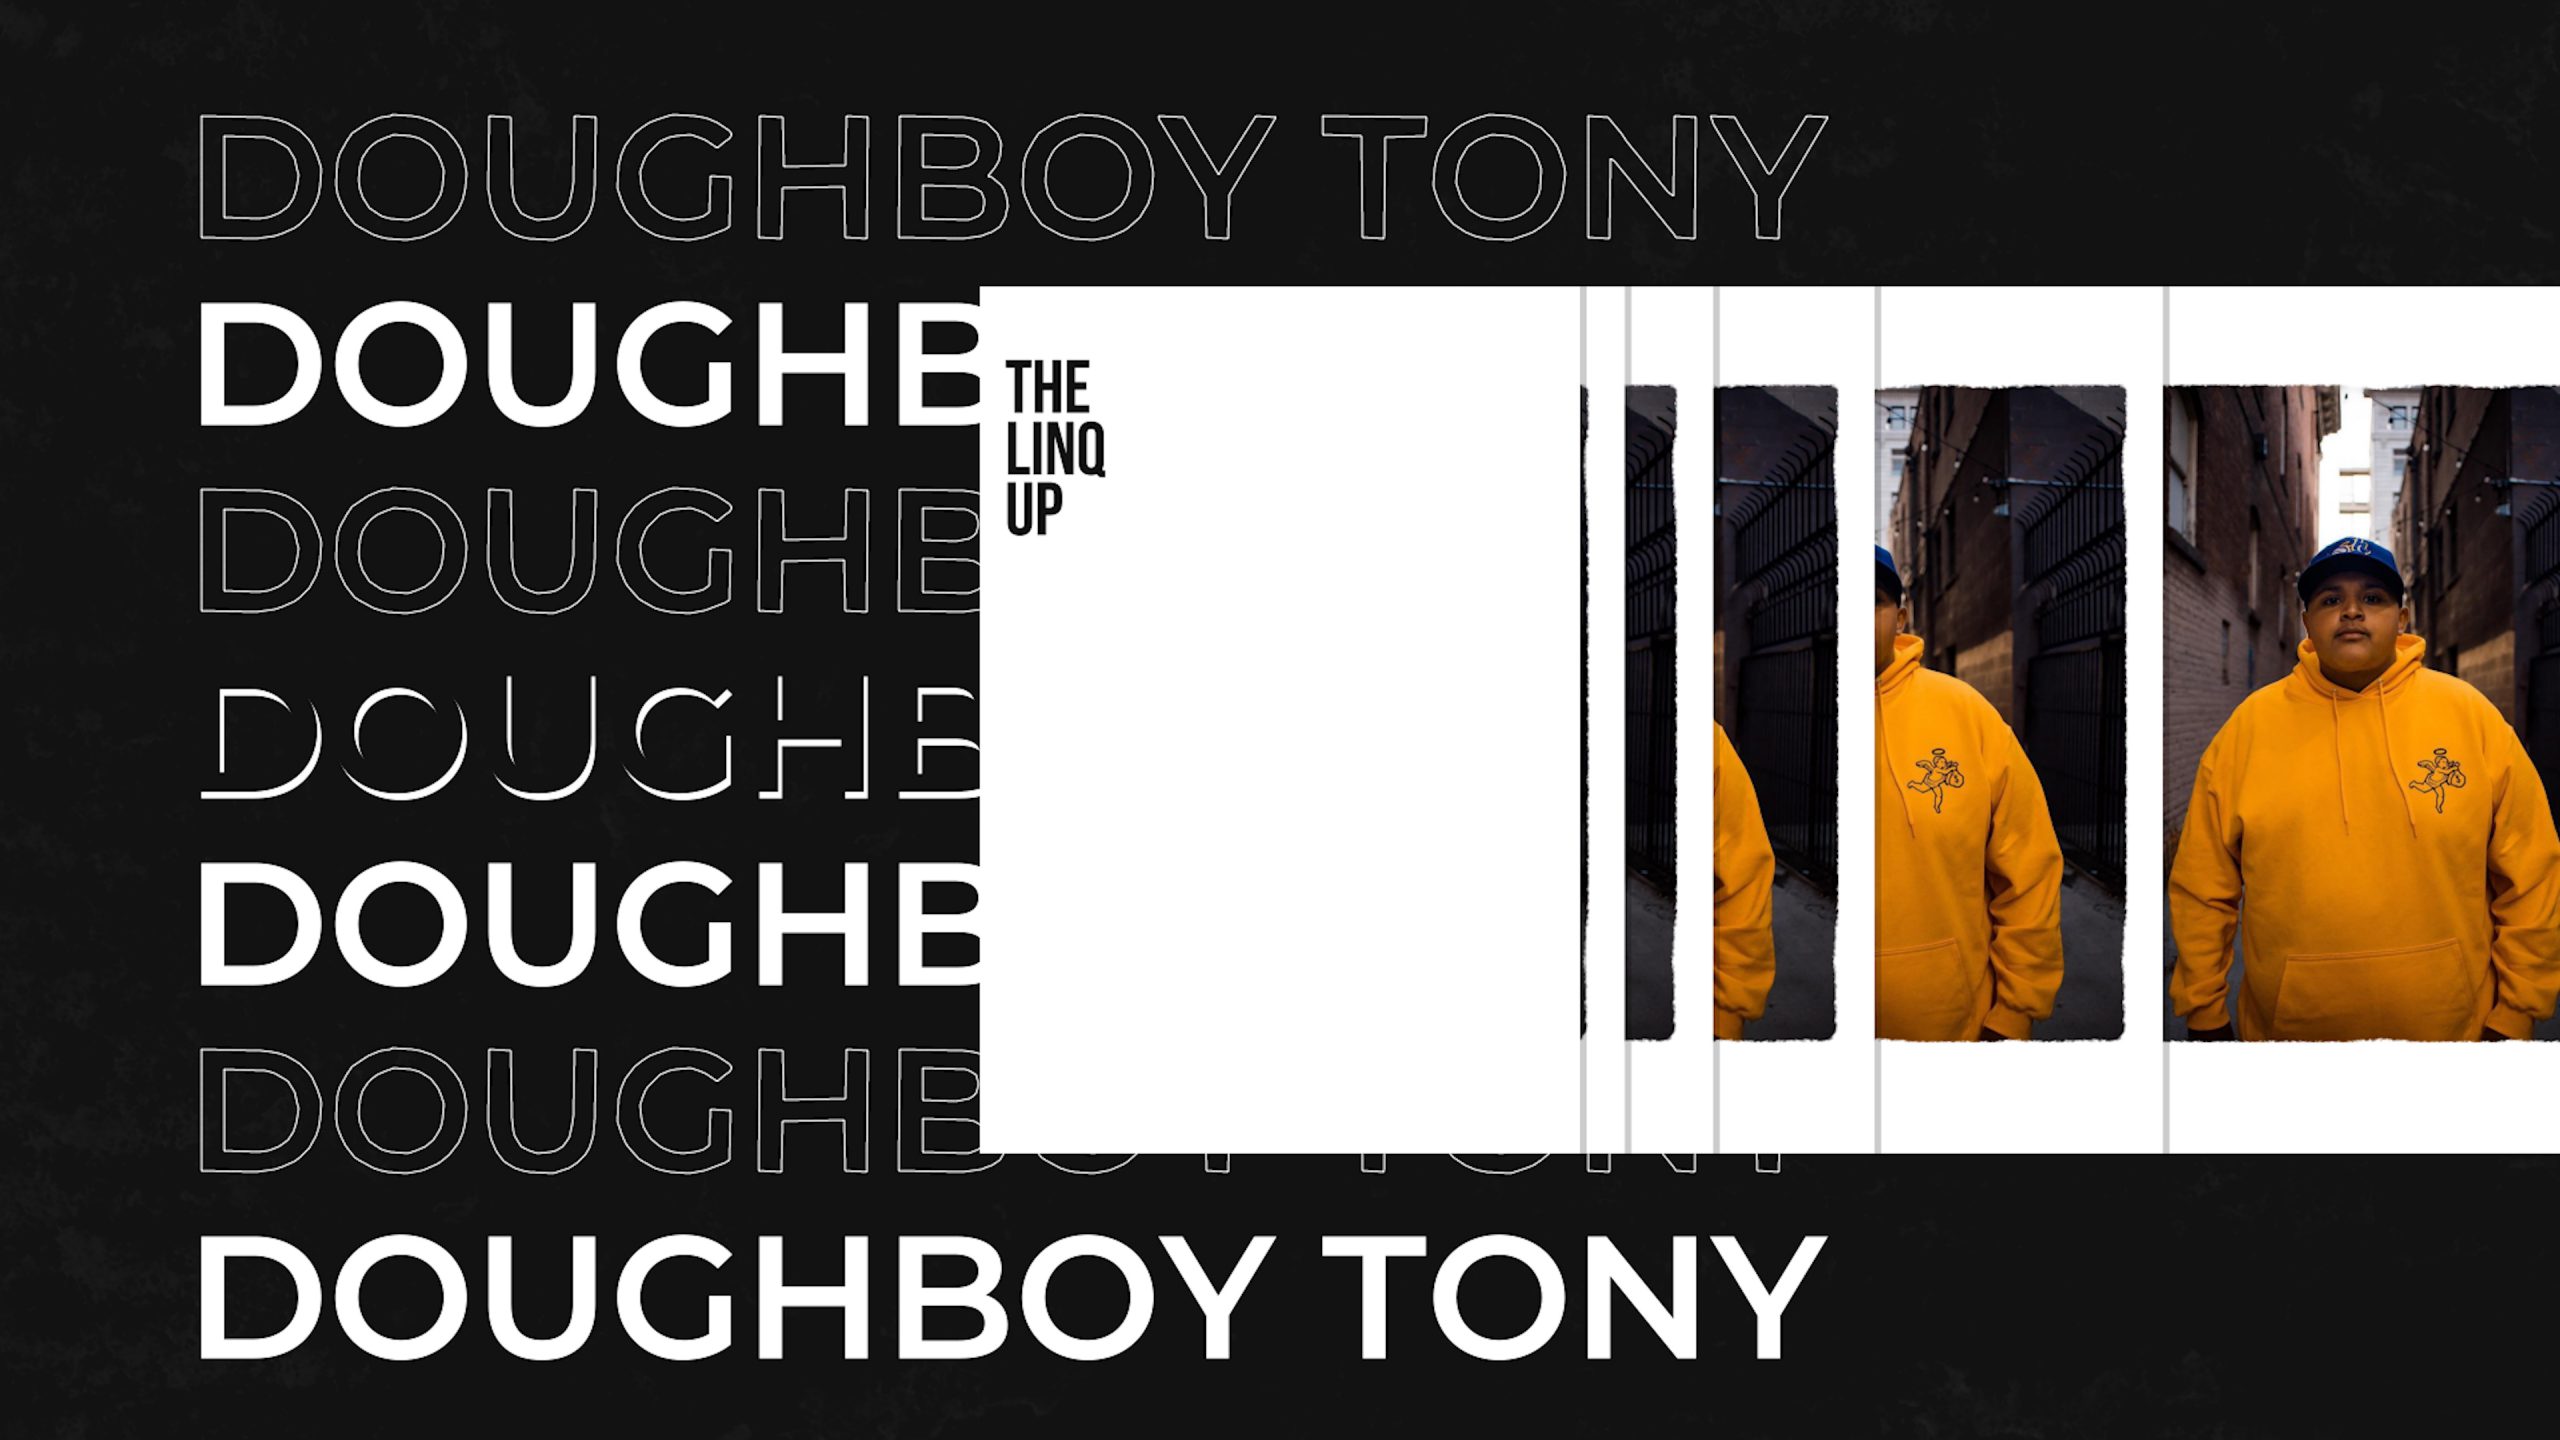 Doughboy Tony Interview